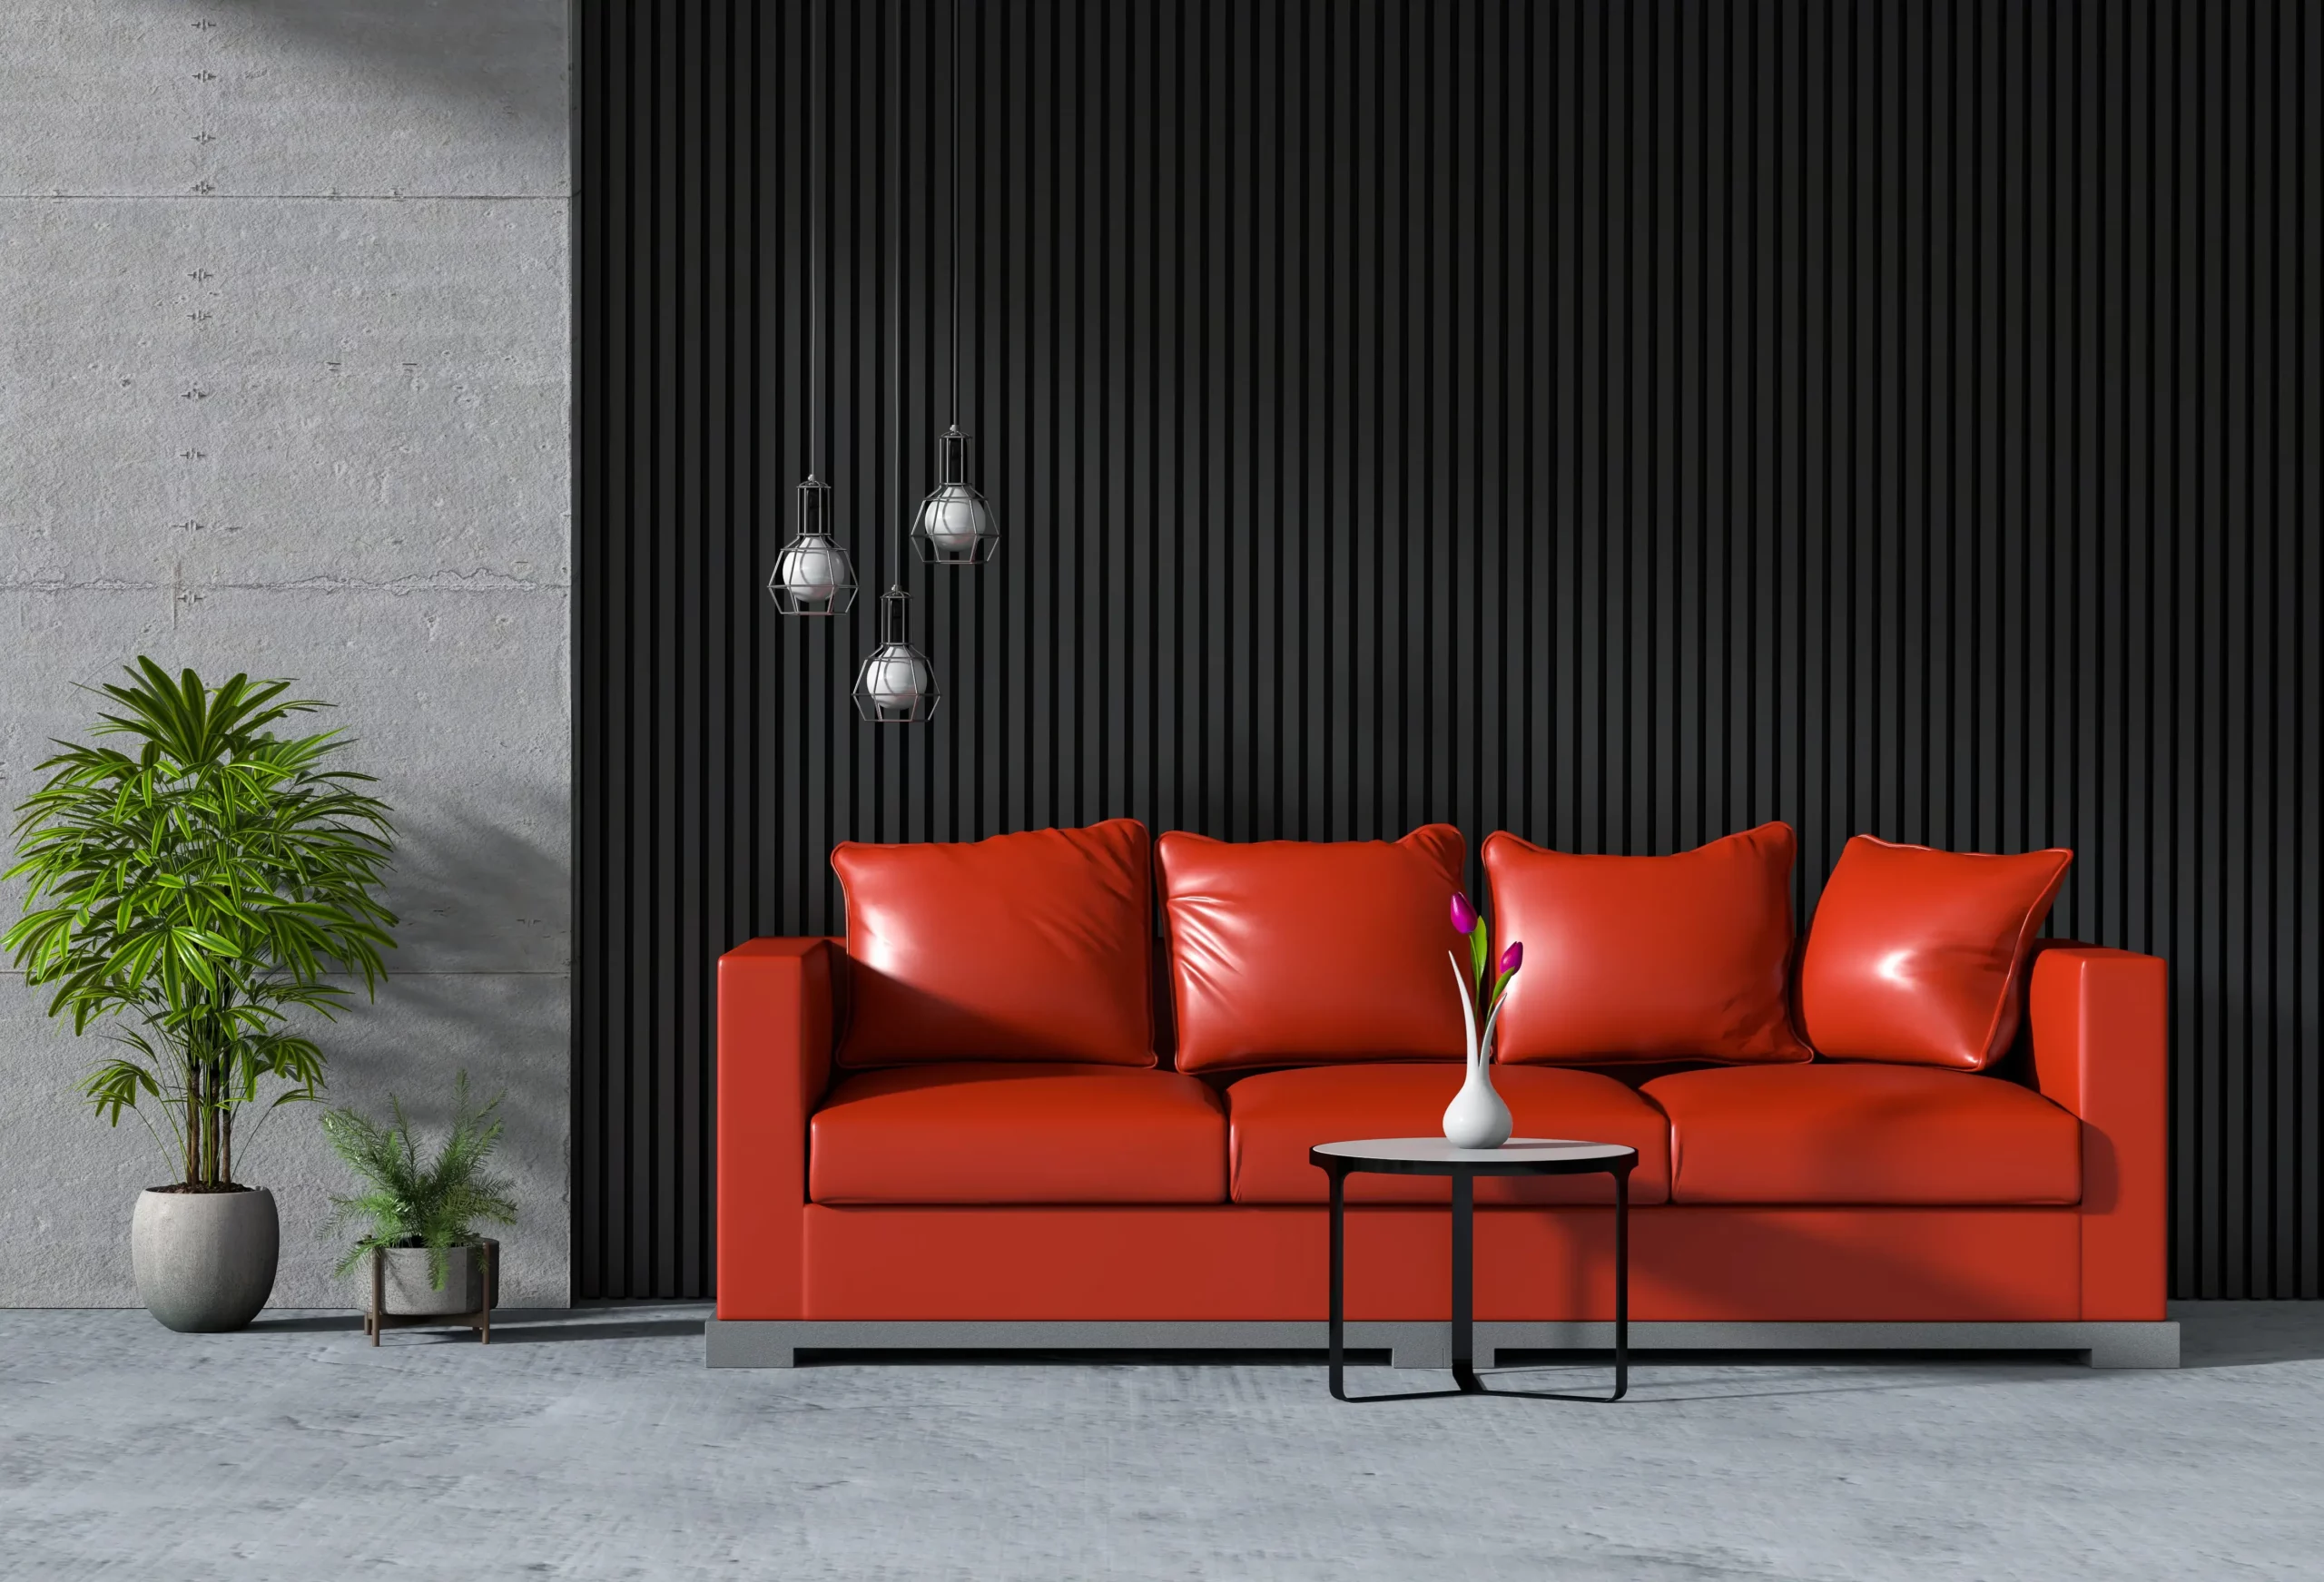 Red Leather Sofa 2 (1)ultimatedesignguide